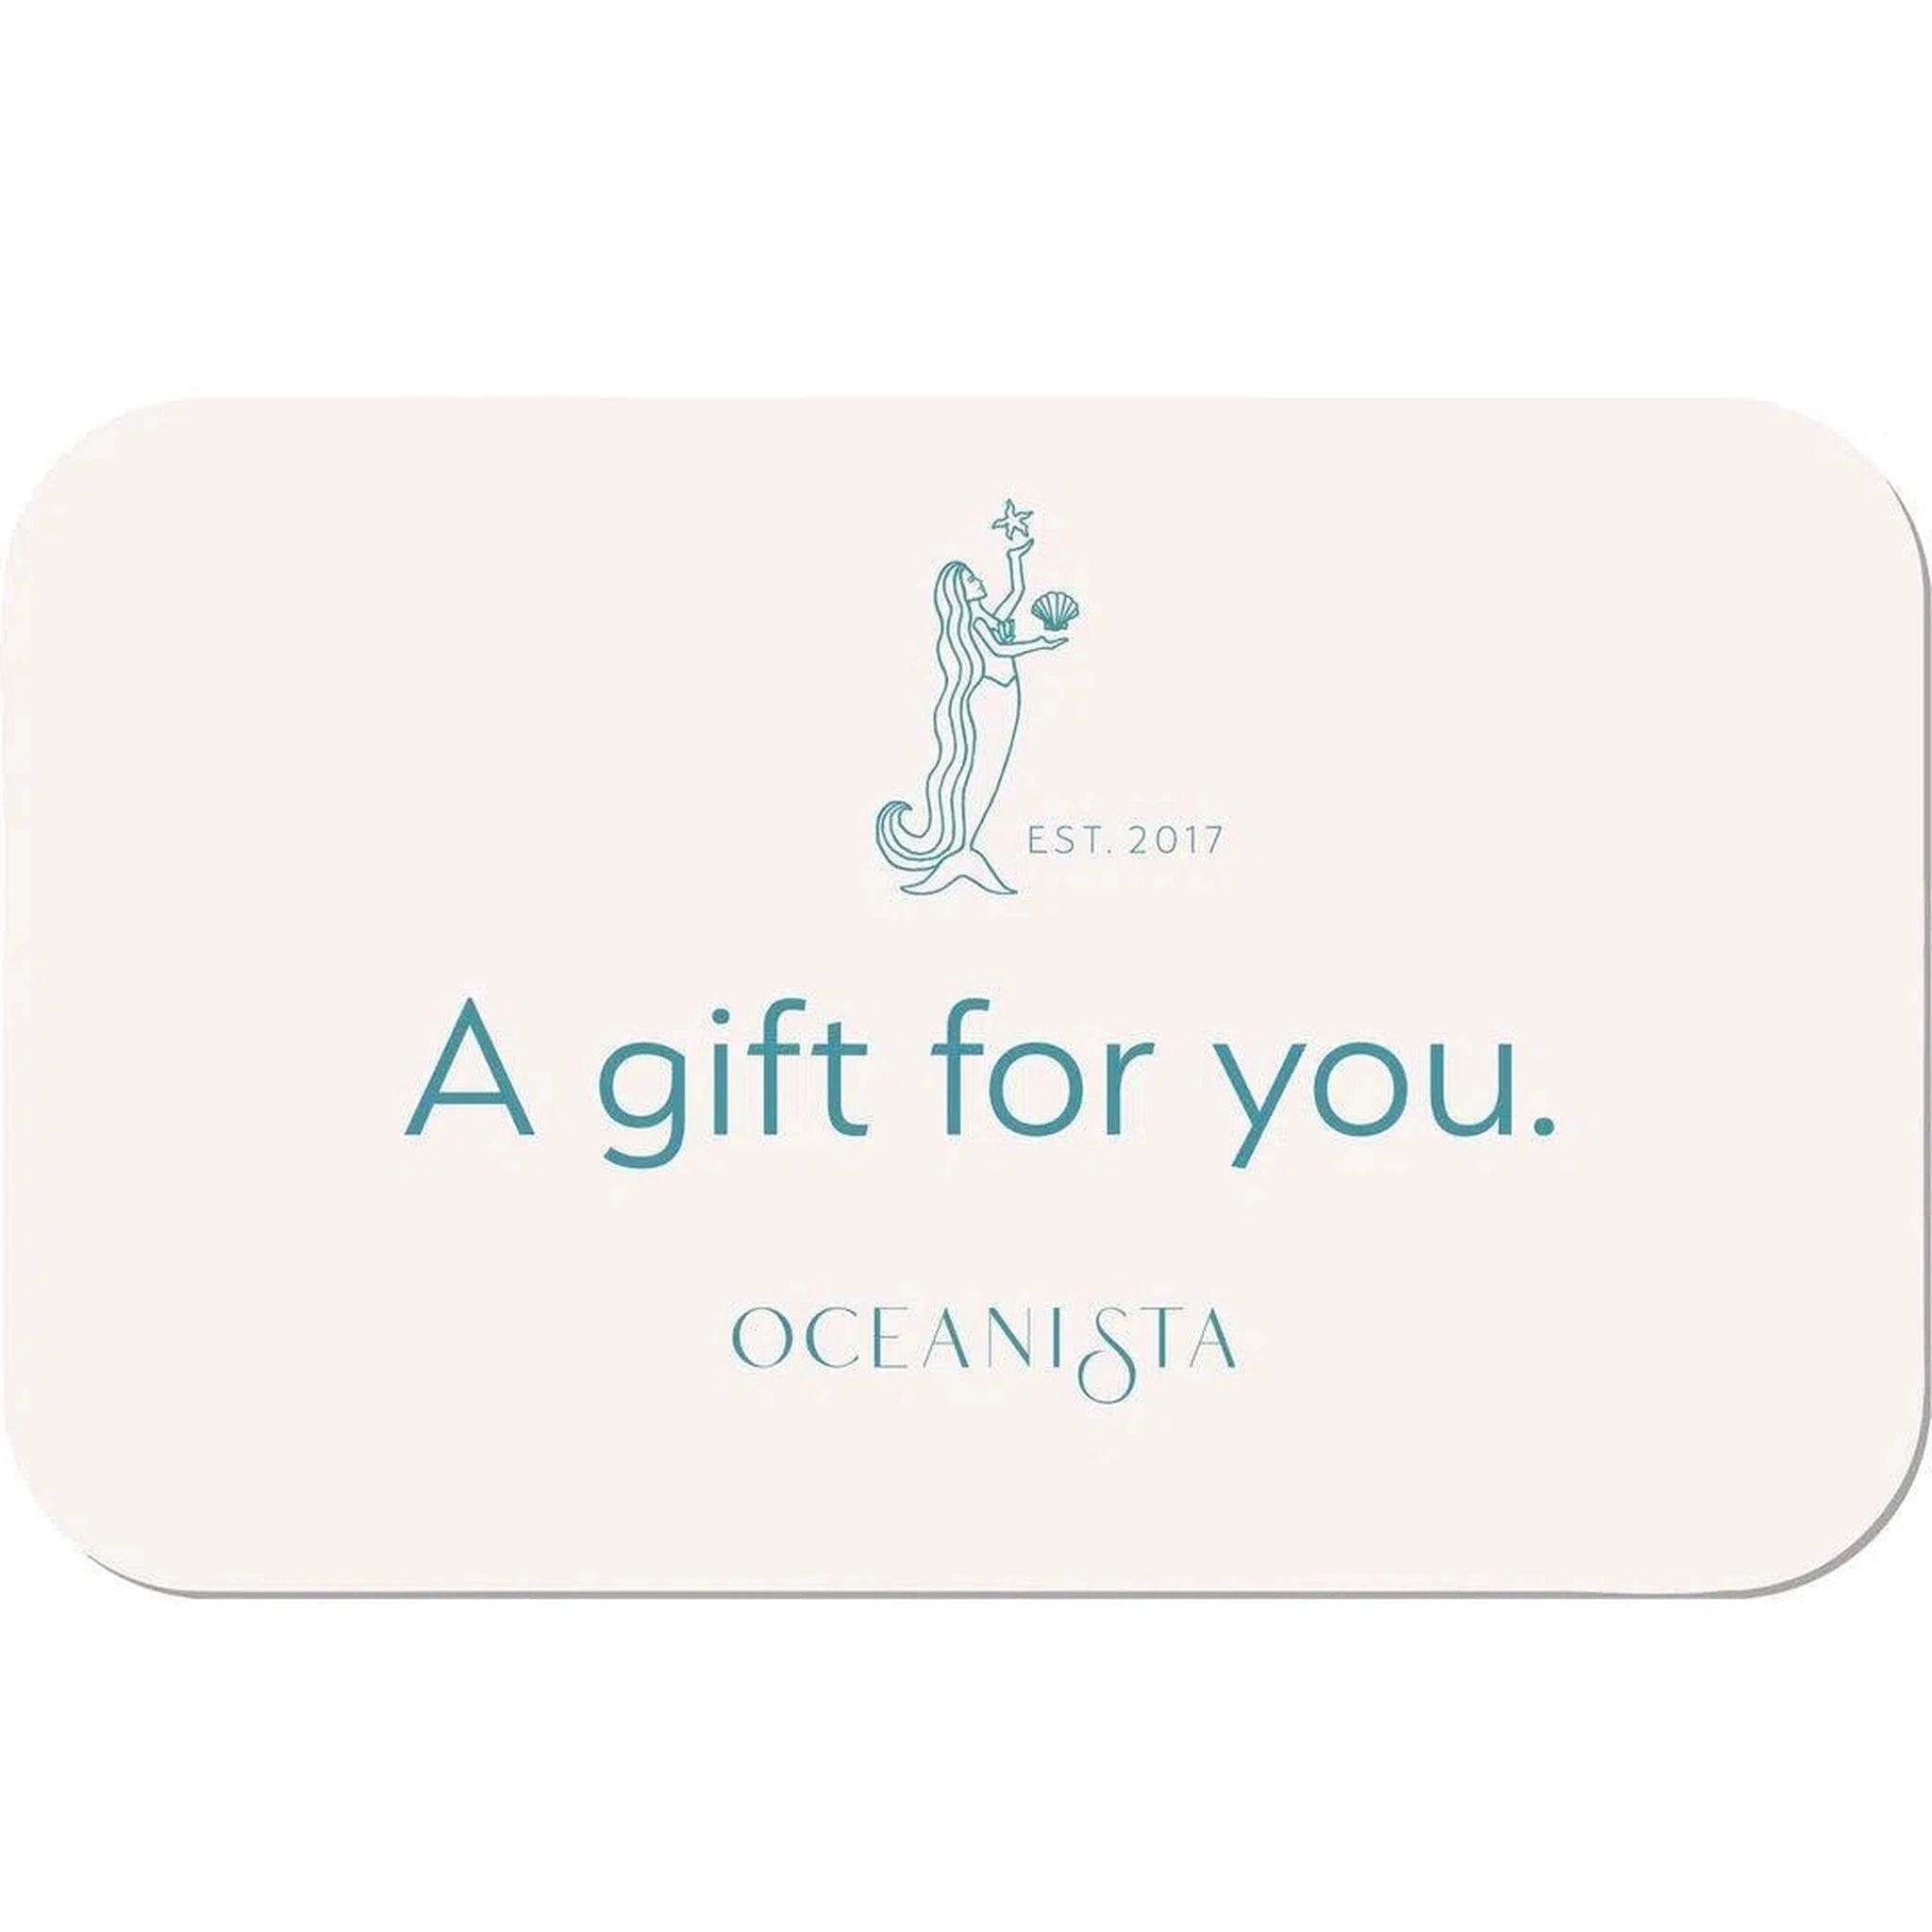 The Oceanista E-Gift Card